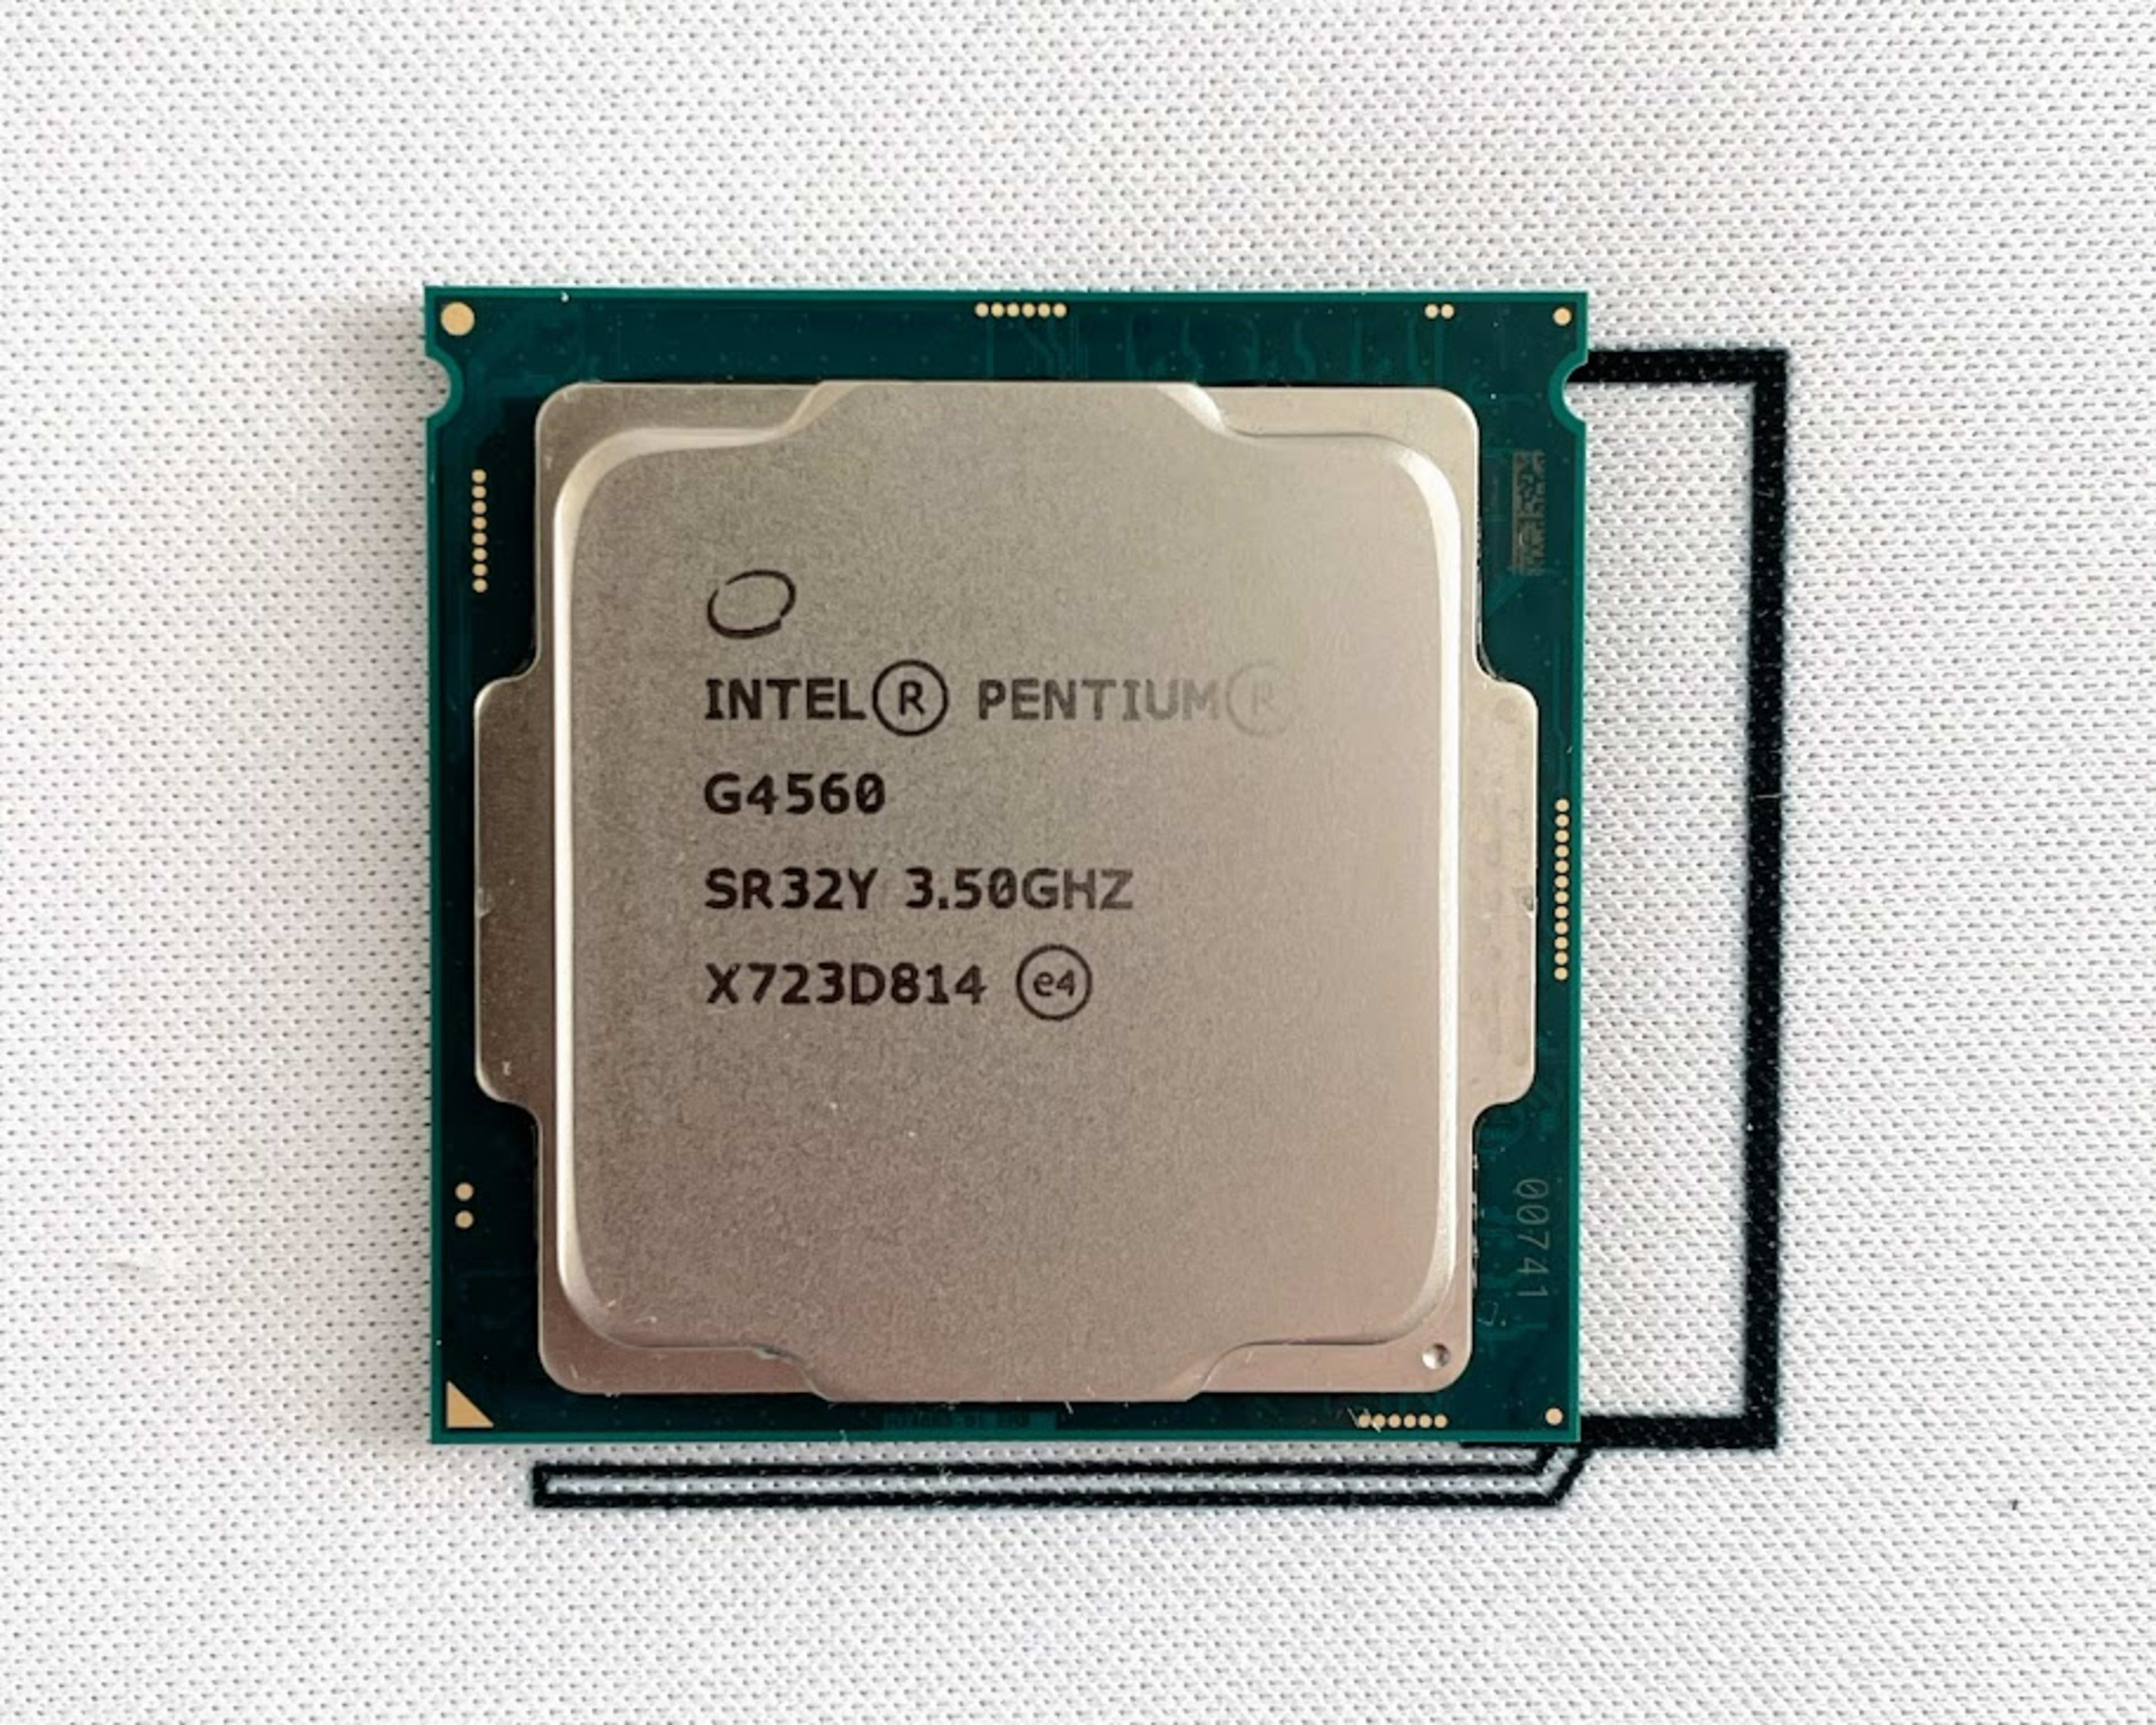 Intel Pentium G4560 3.50GHz Dual-Core 3MB LGA1151 CPU Processor SR32Y 54W